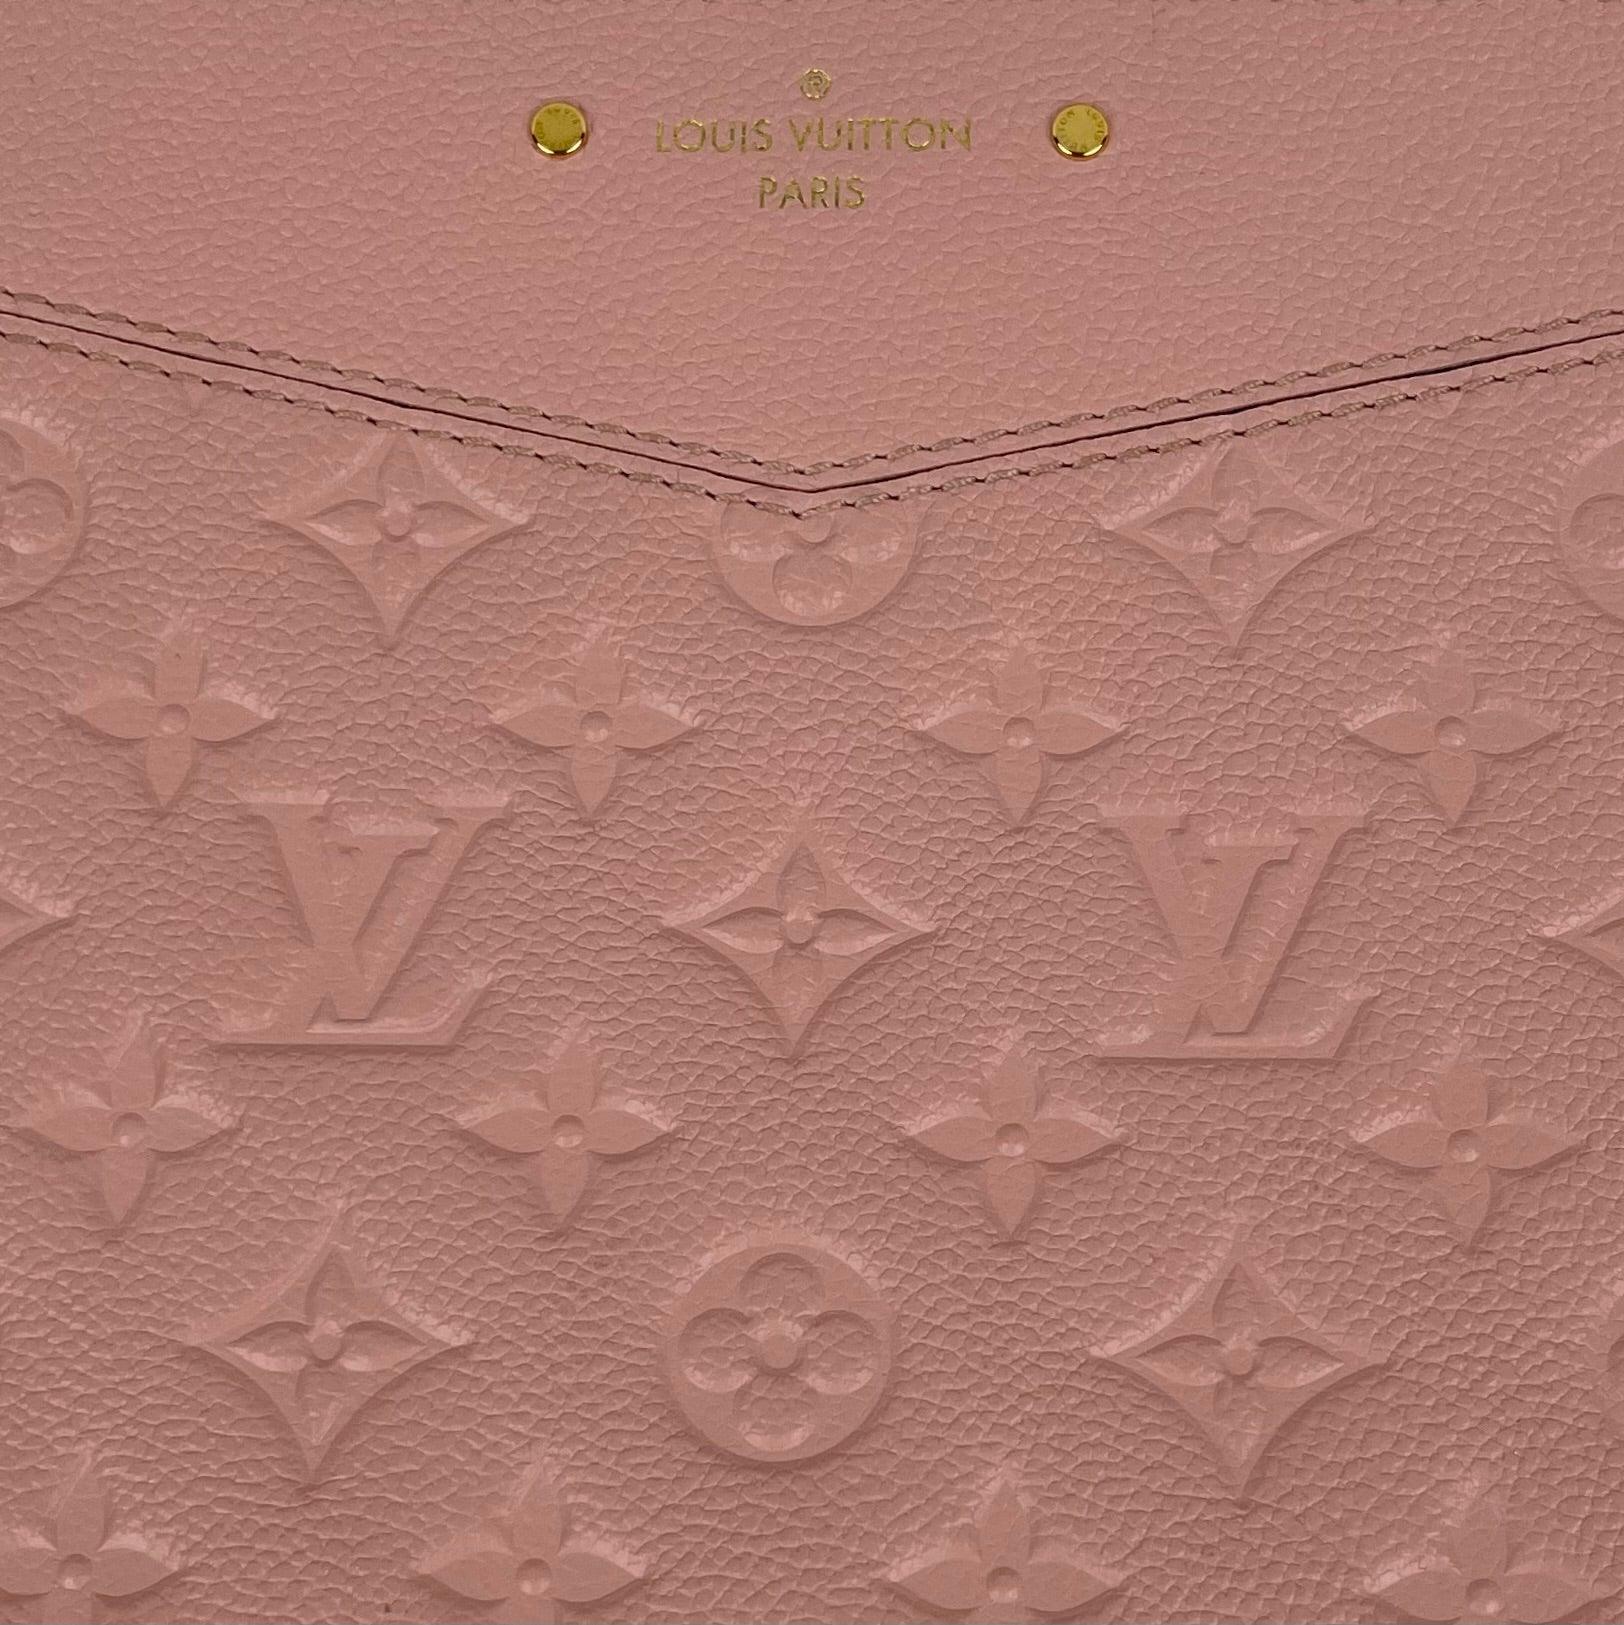 Louis Vuitton Daily Pouch Rose Poudre Monogram